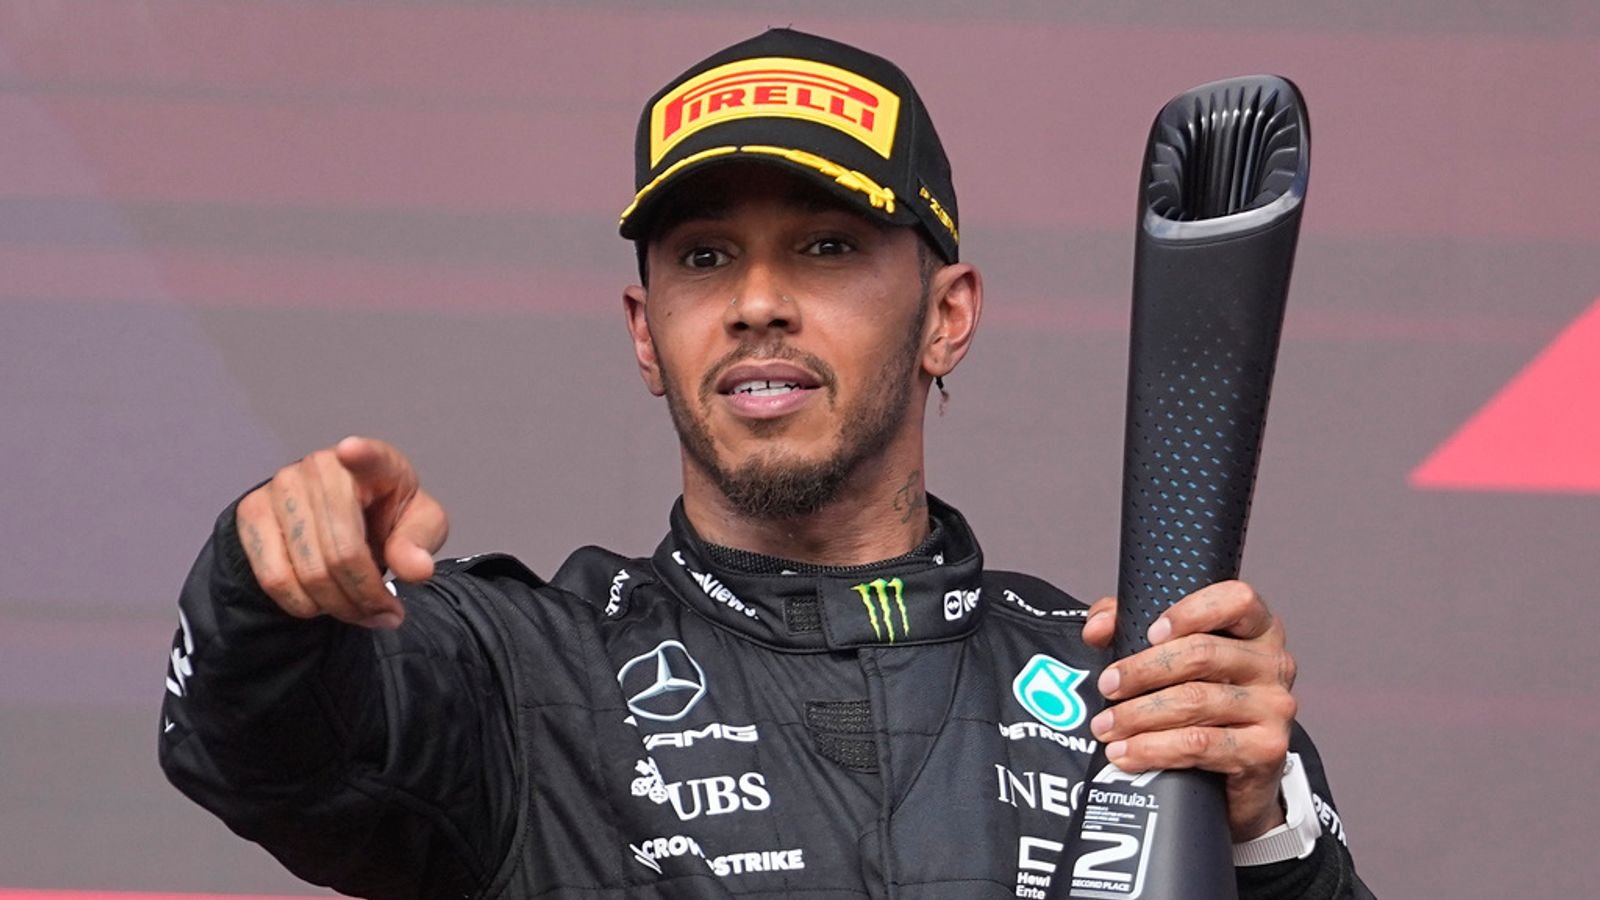 F1 driver Lewis Hamilton disqualified from U.S Grand Prix